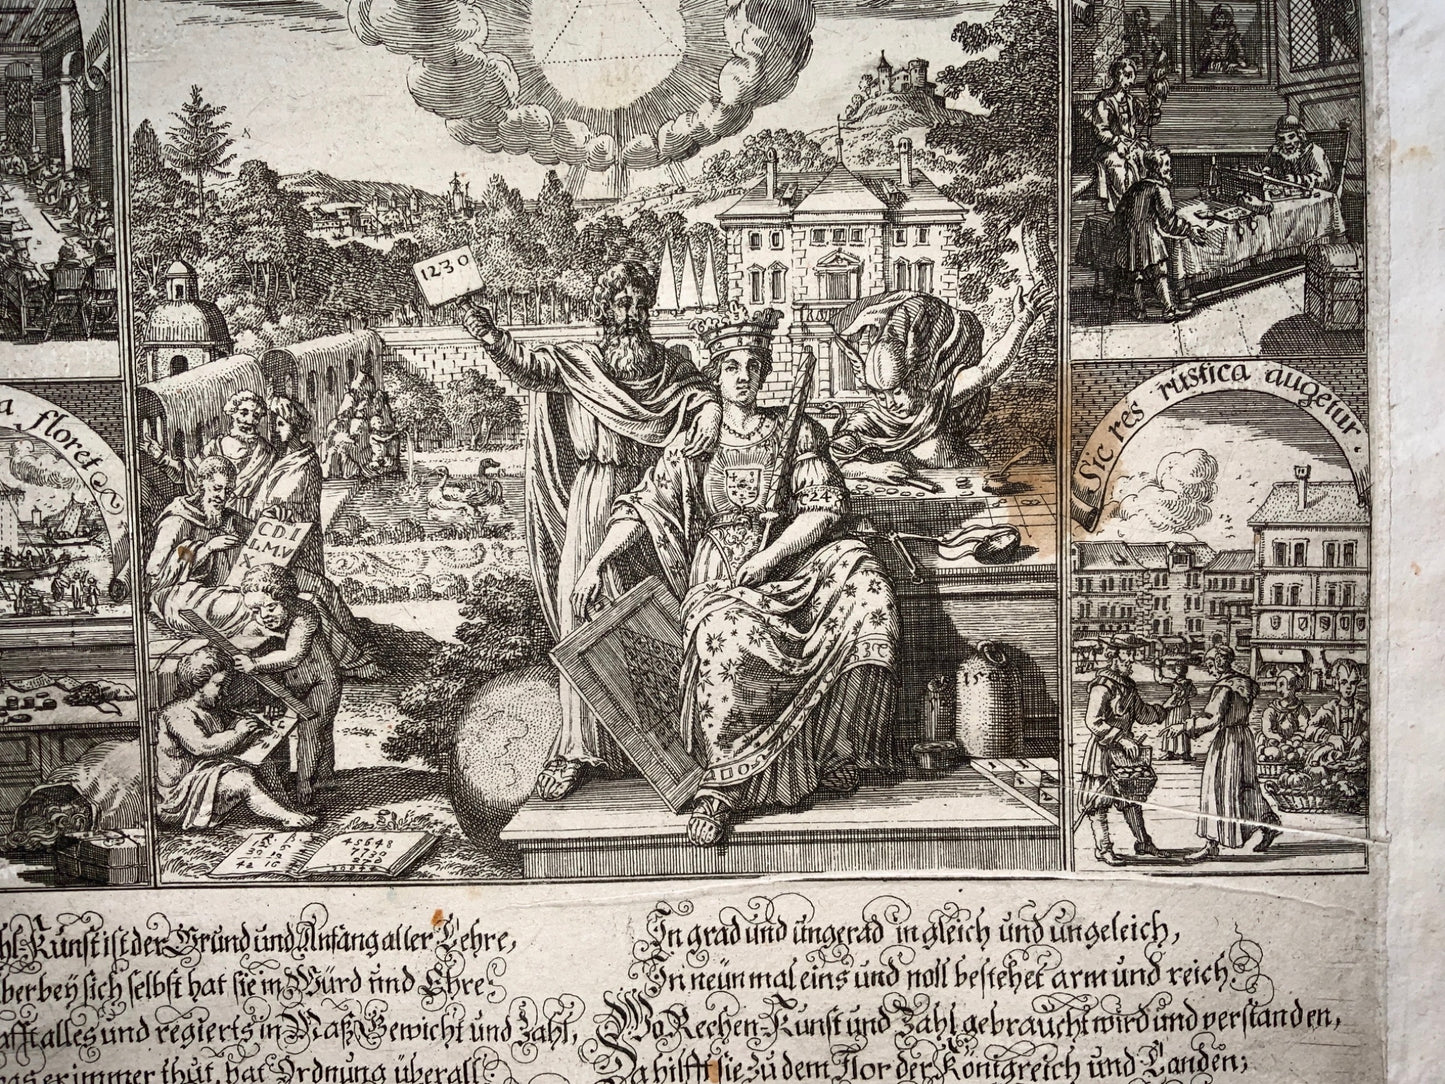 1699 Very Scarce Broadside - ARITHMETICS - Mathematics - Johannes Meyer